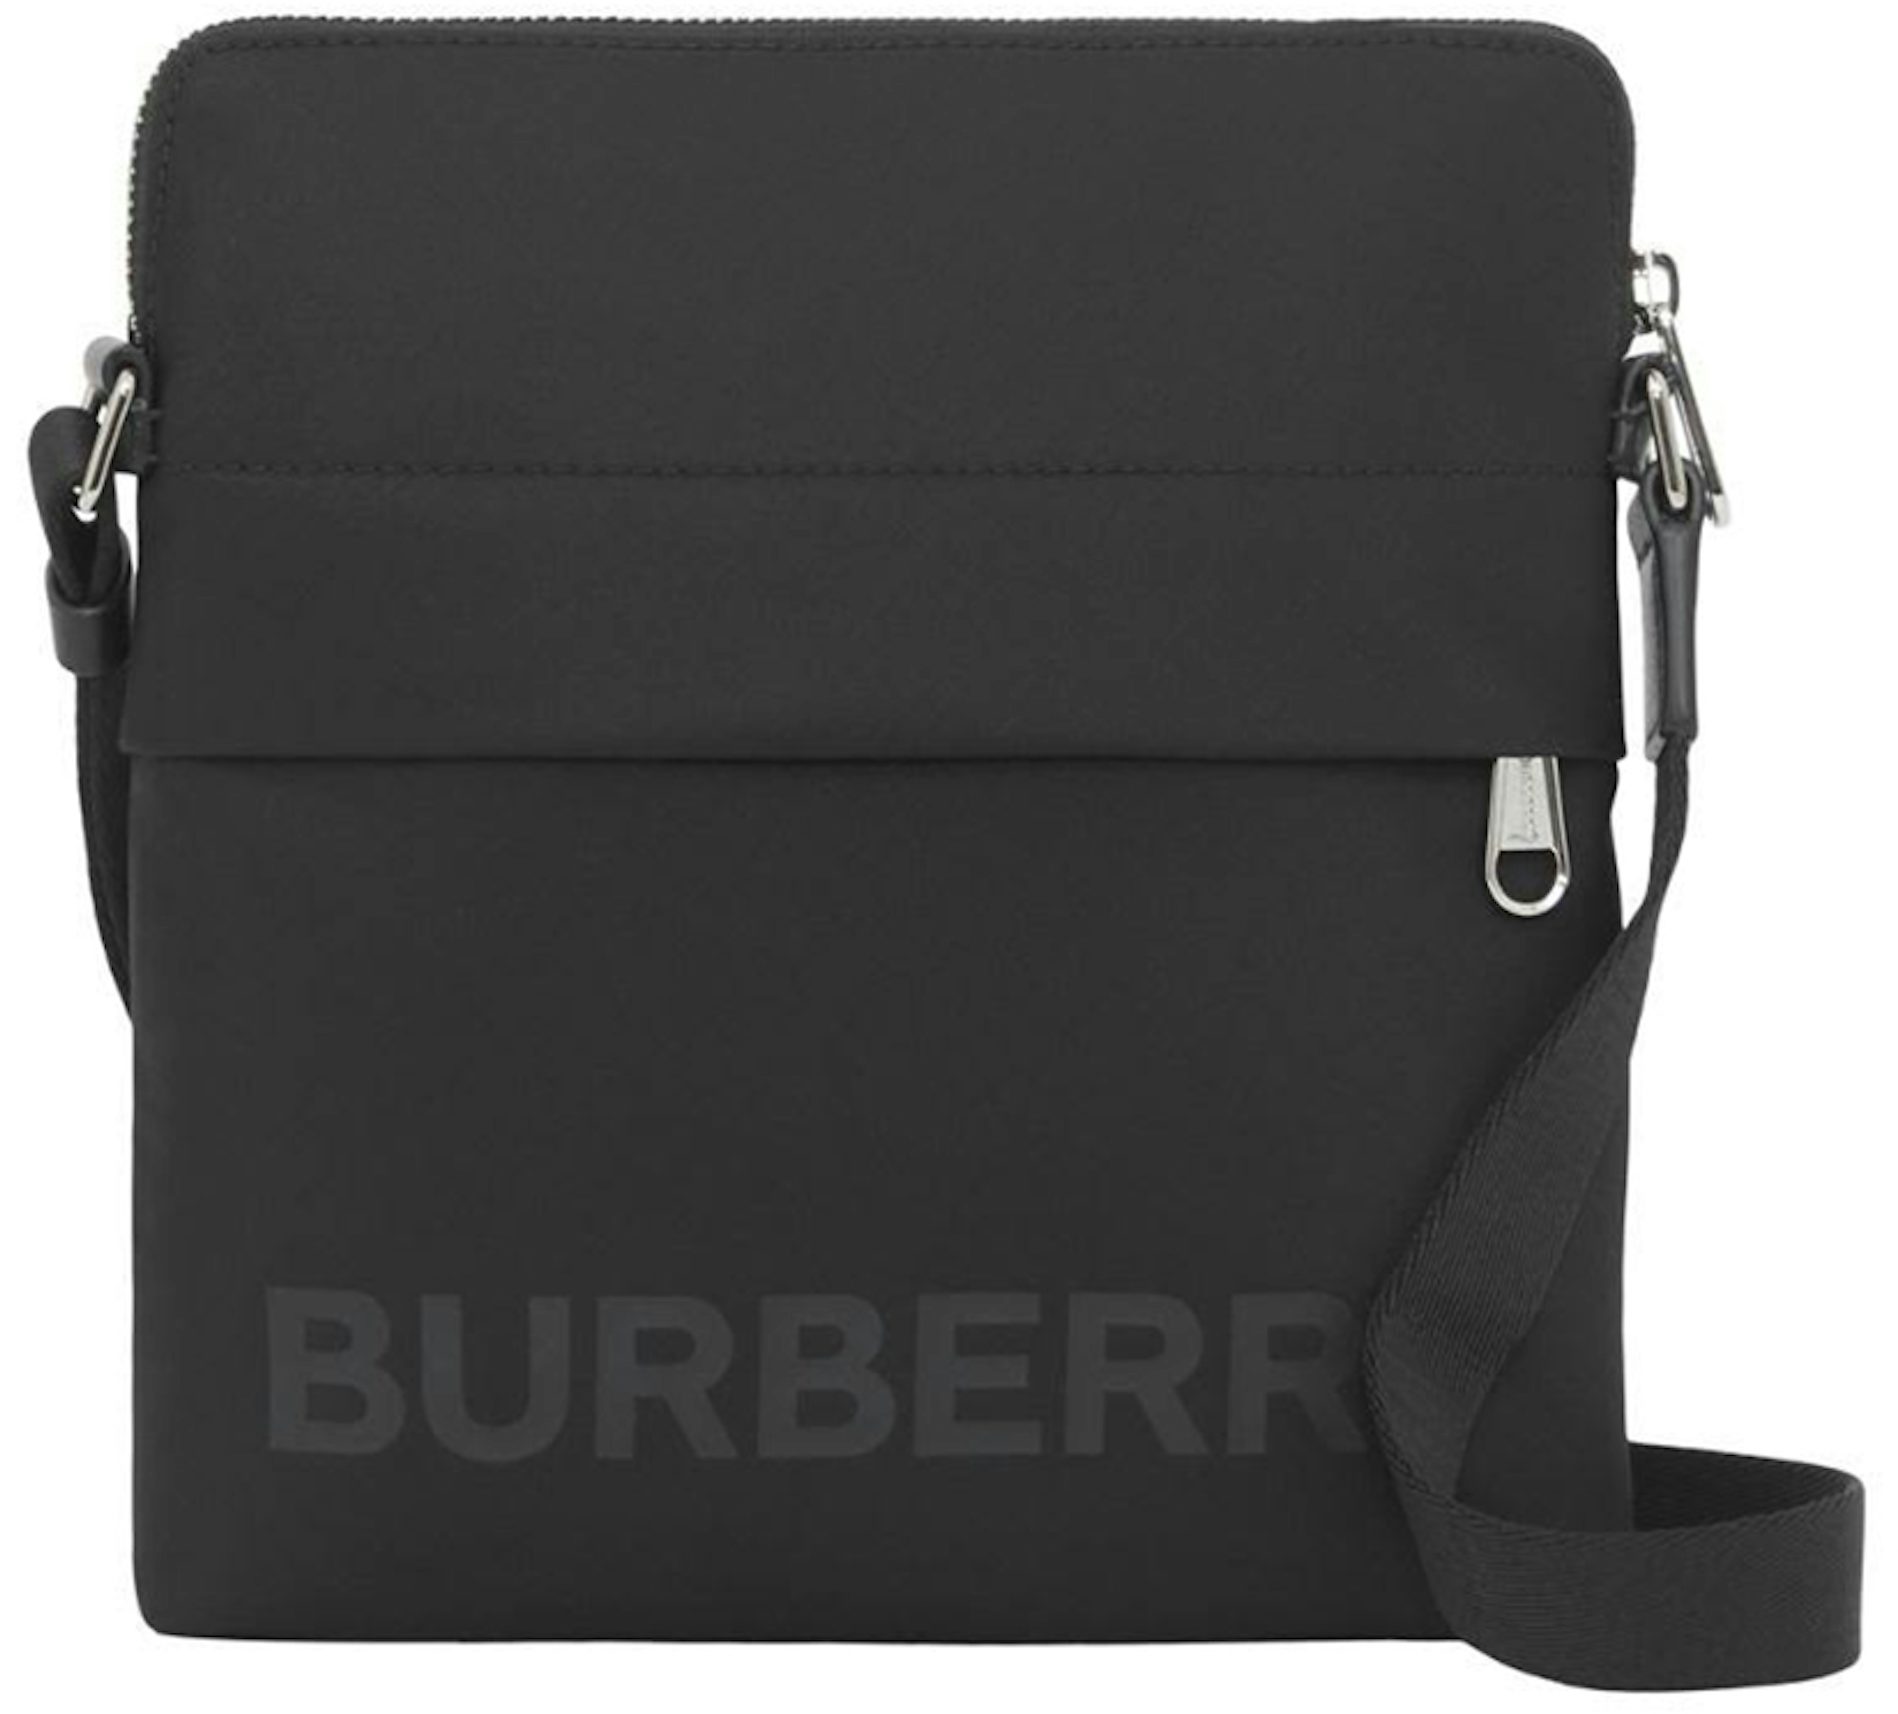 Burberry Logo Print Nylon Crossbody Bag Black in Nylon with Silver